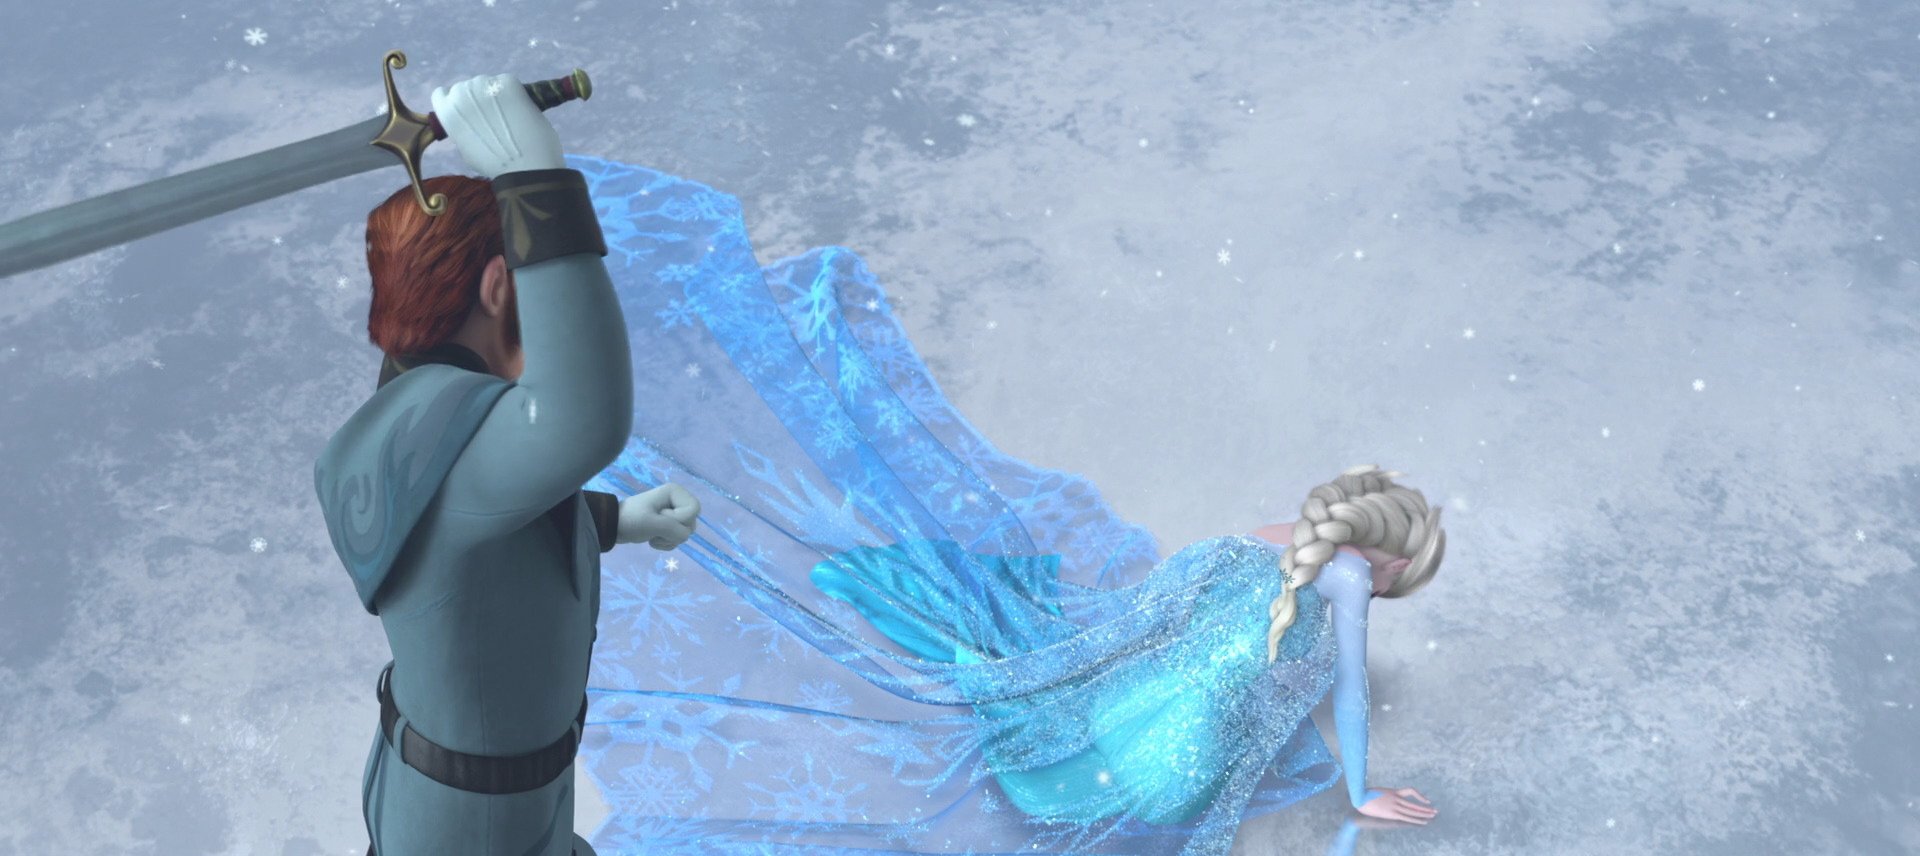 Download Hans (Frozen) Elsa (Frozen) Frozen (Movie) Movie Frozen Wallpaper